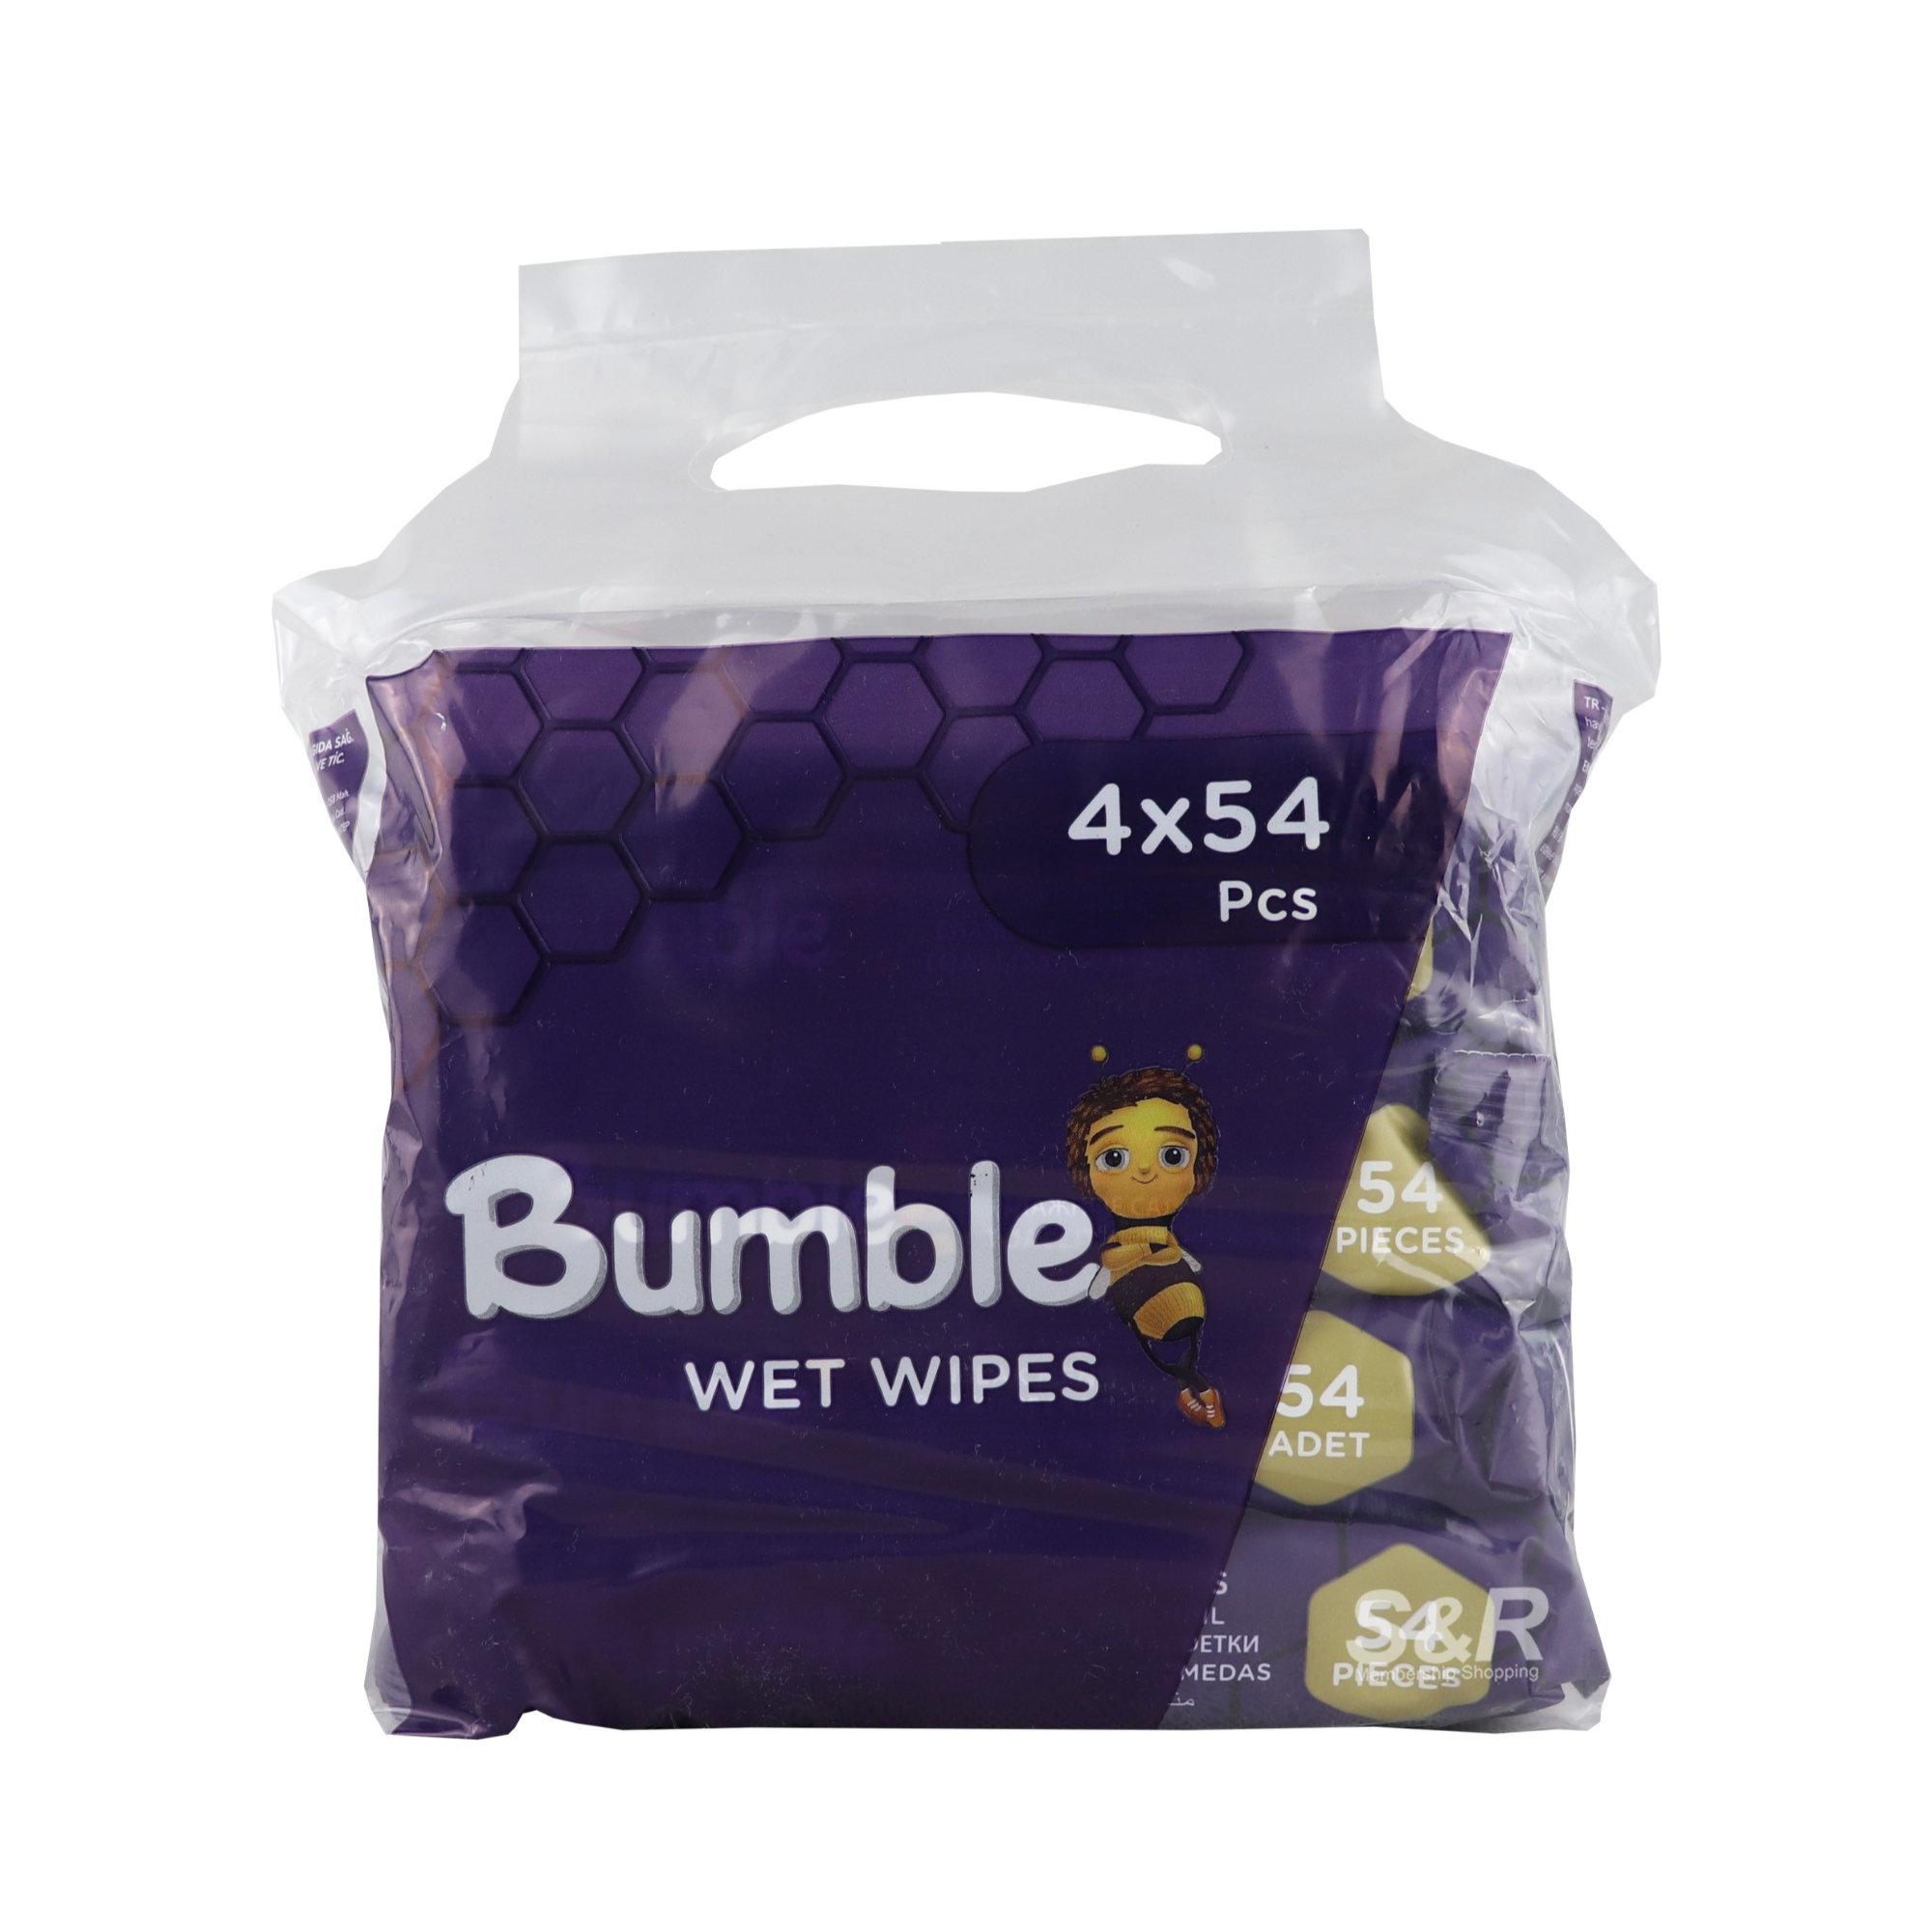 Bumble Wet Wipes 4packs x 54pcs